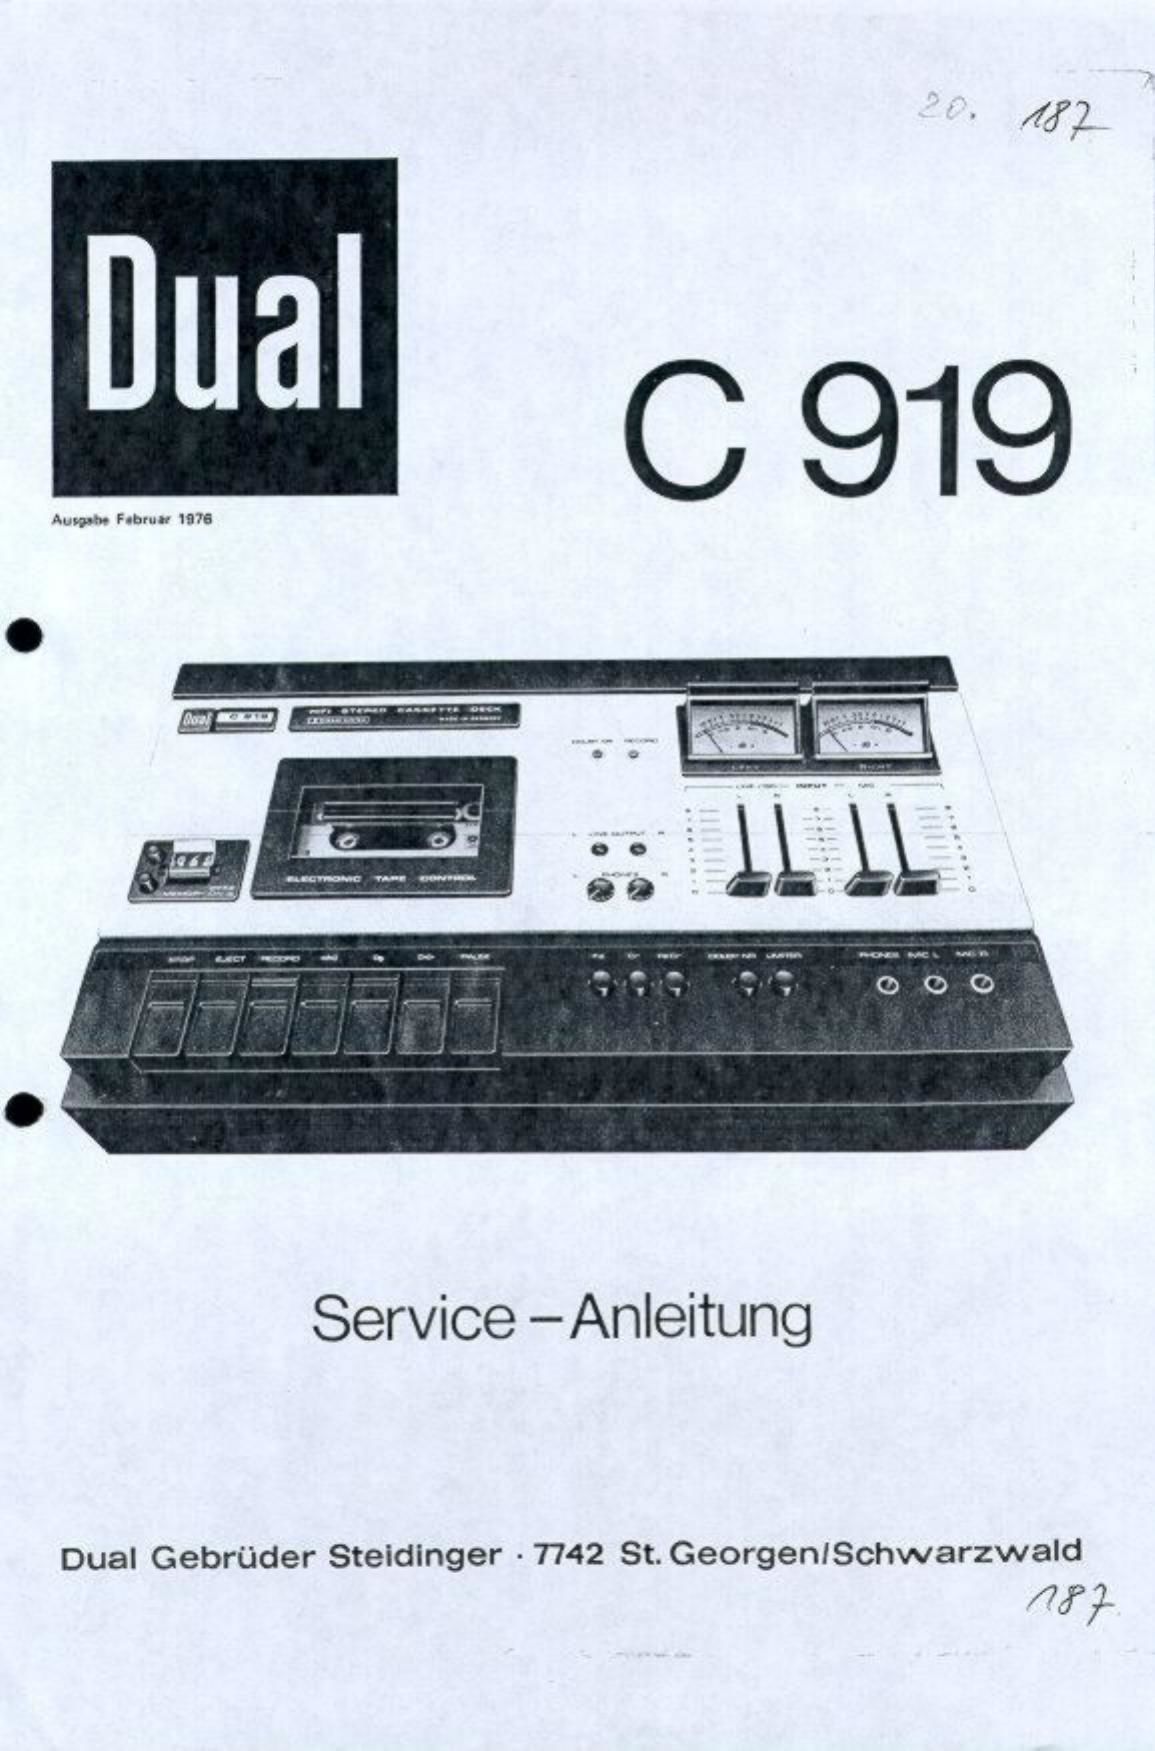 Service Manual-Anleitung für Dual C 901 